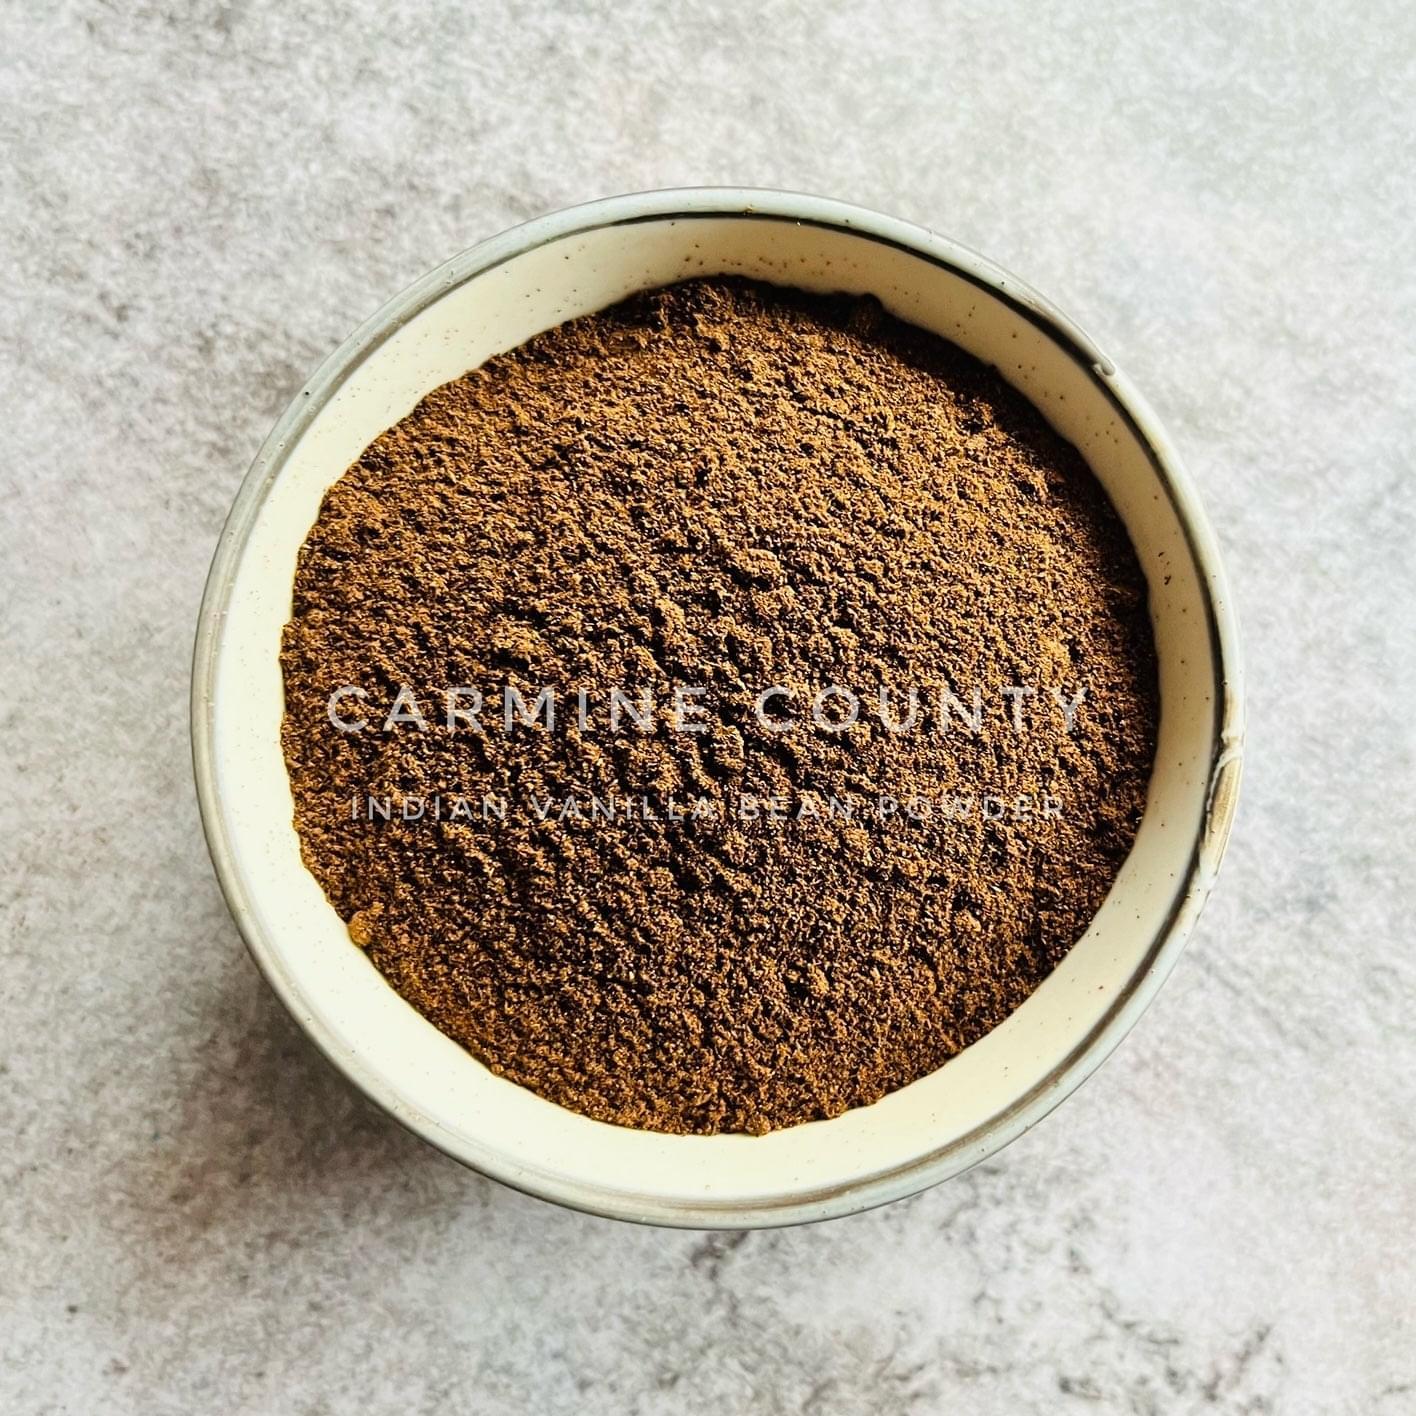 Carmine County All Natural Indian Vanilla Bean Powder 10 g